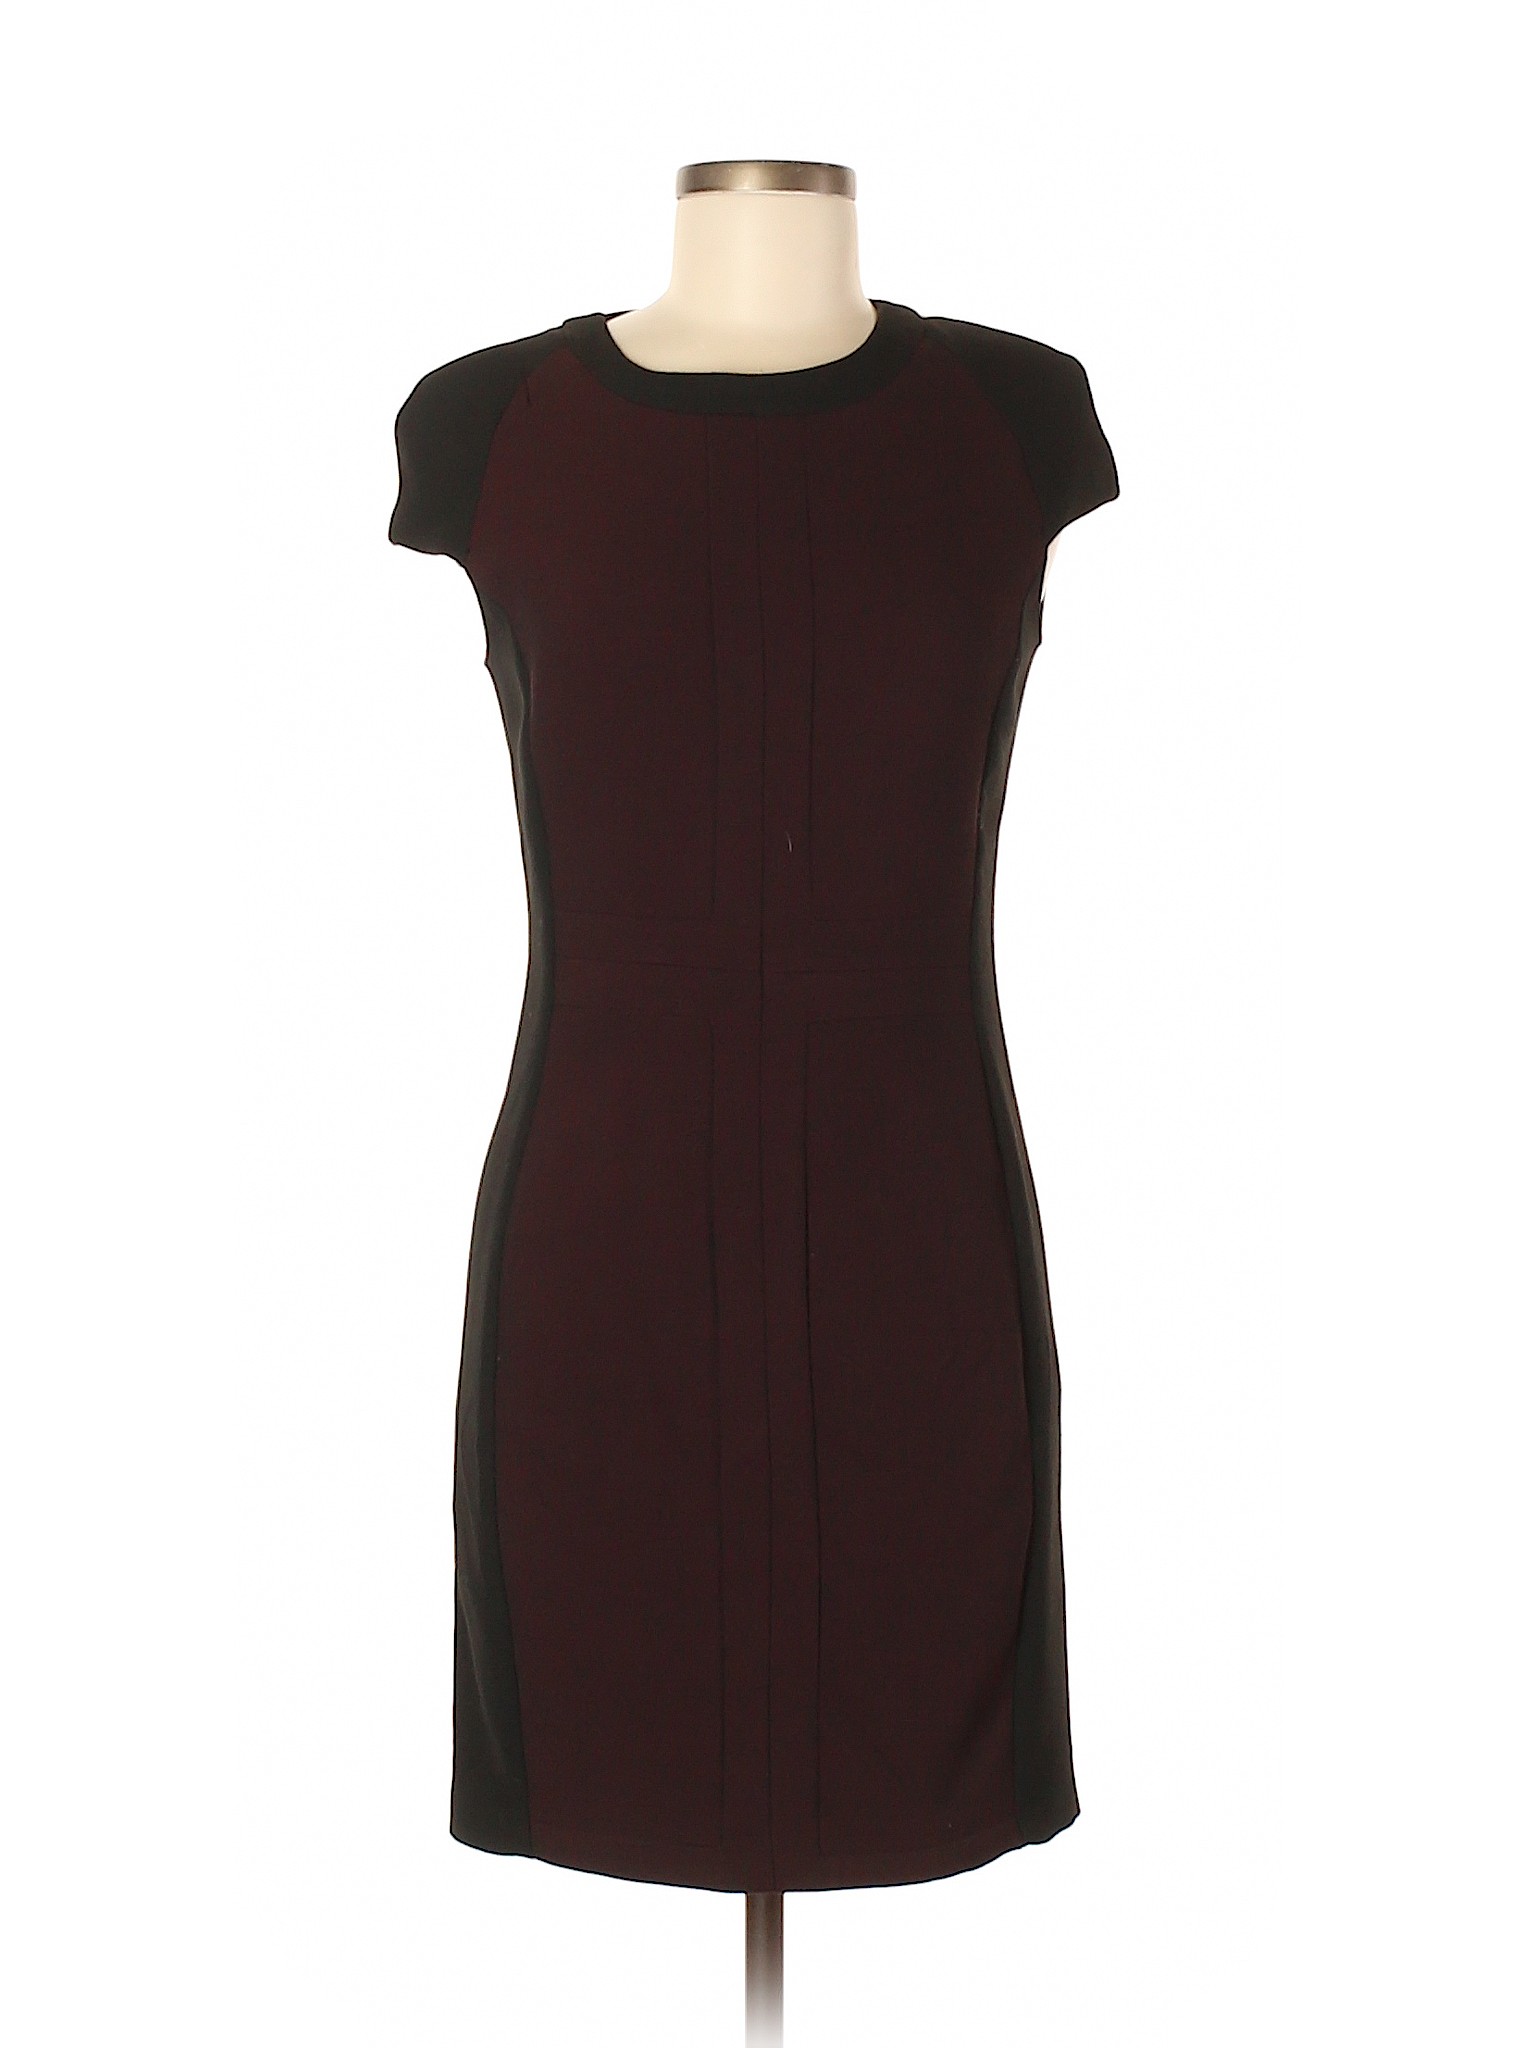 Zara Basic Solid Purple Casual Dress Size M - 75% off | thredUP